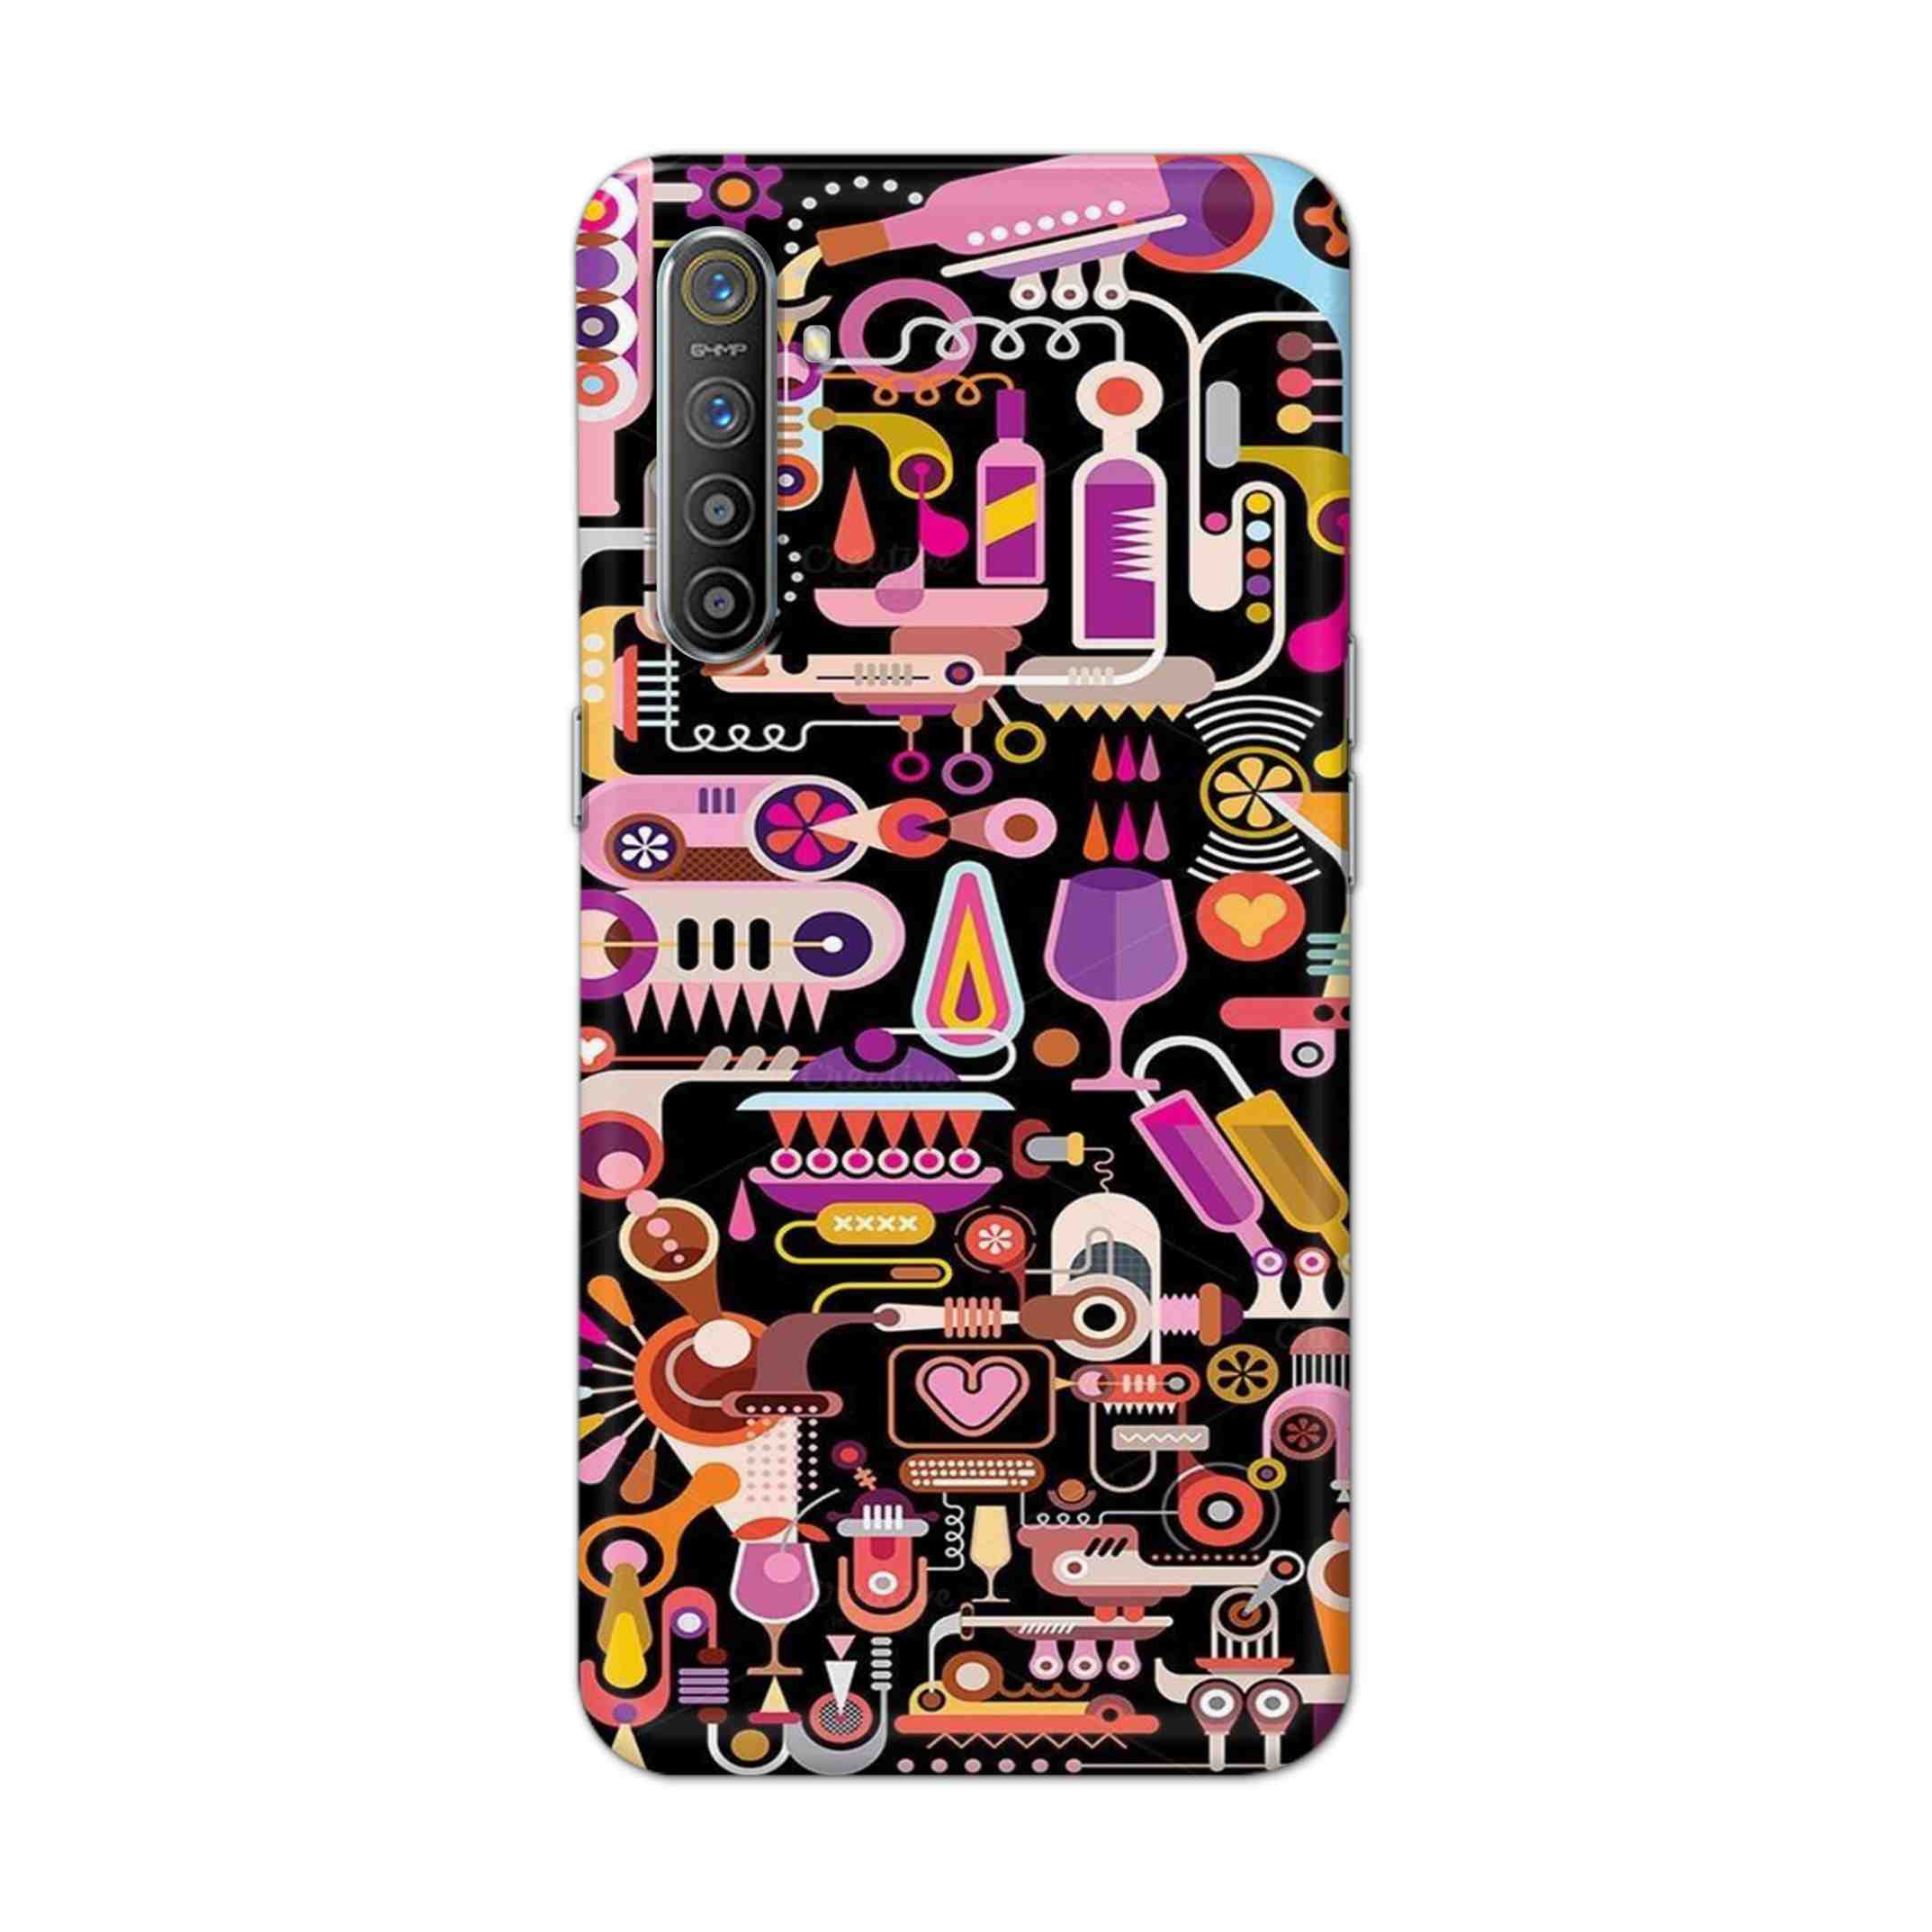 Buy Lab Art Hard Back Mobile Phone Case Cover For Oppo Realme XT Online